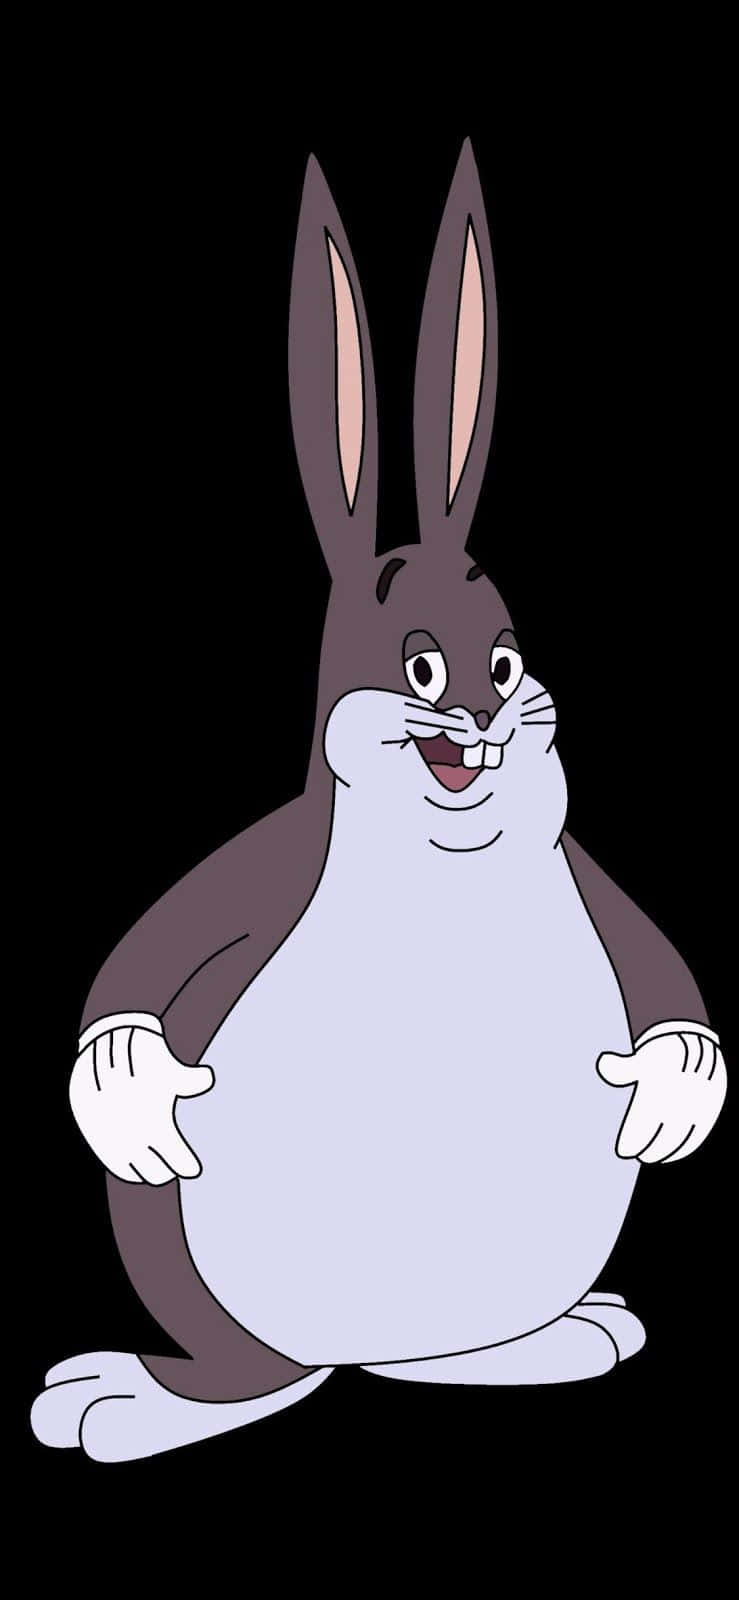 A Cartoon Rabbit With Big Ears And Big Feet Wallpaper